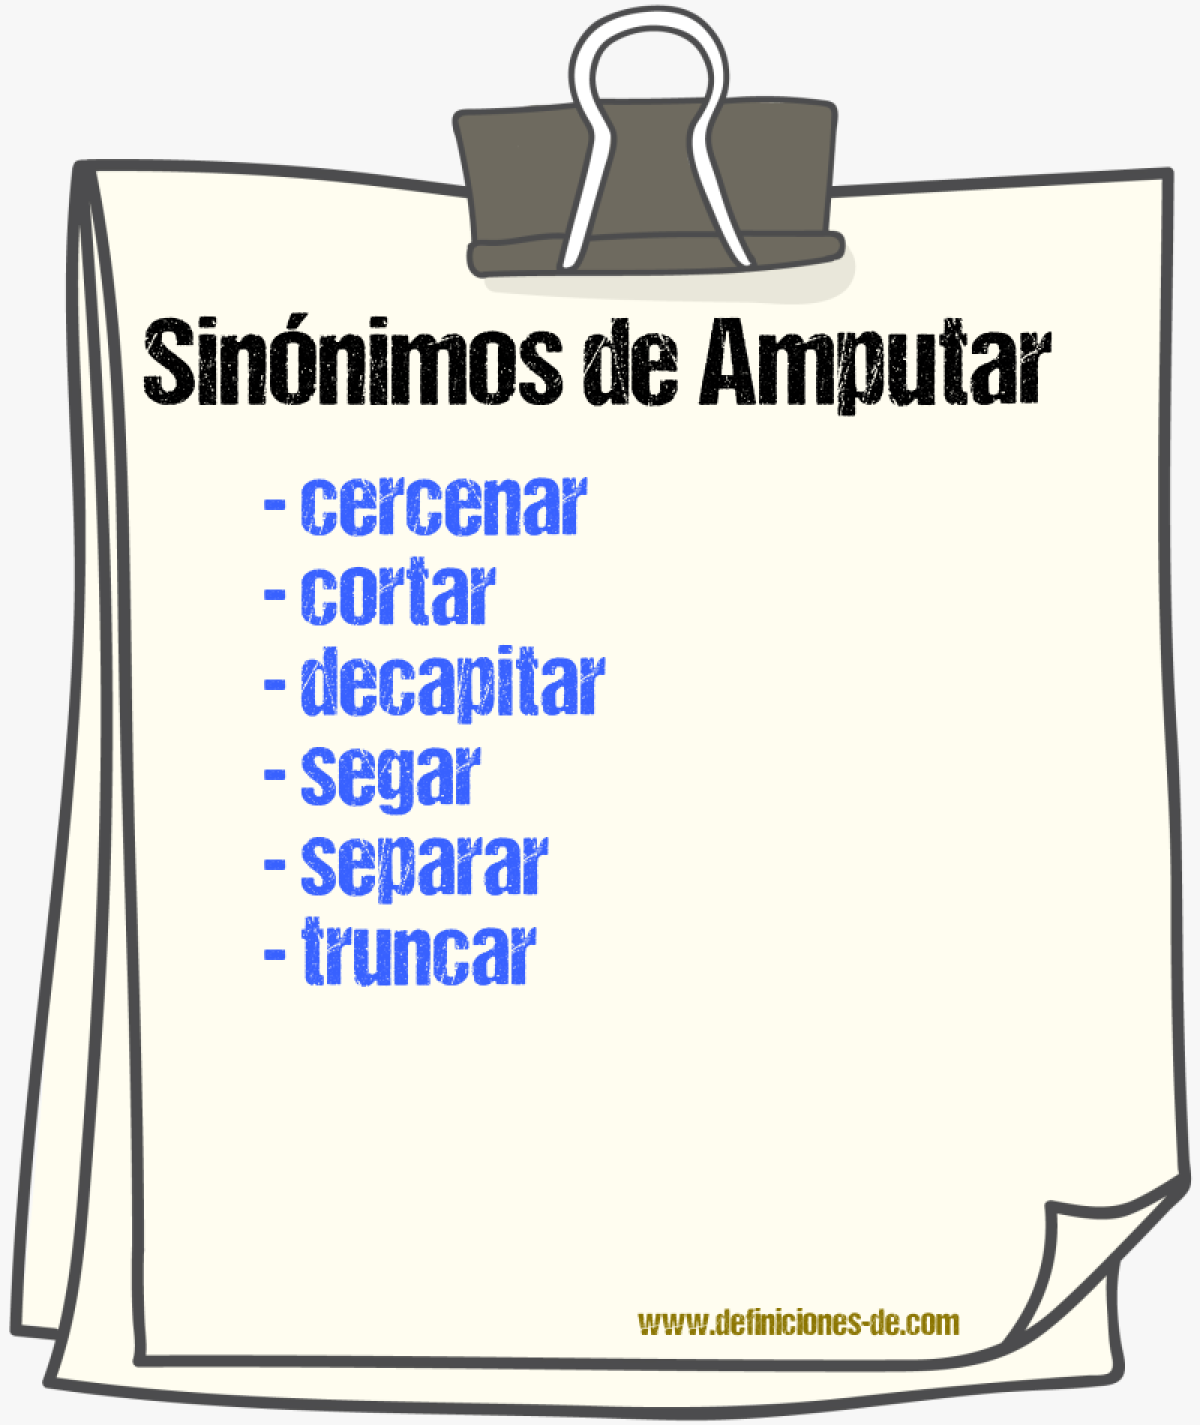 Sinónimos de amputar